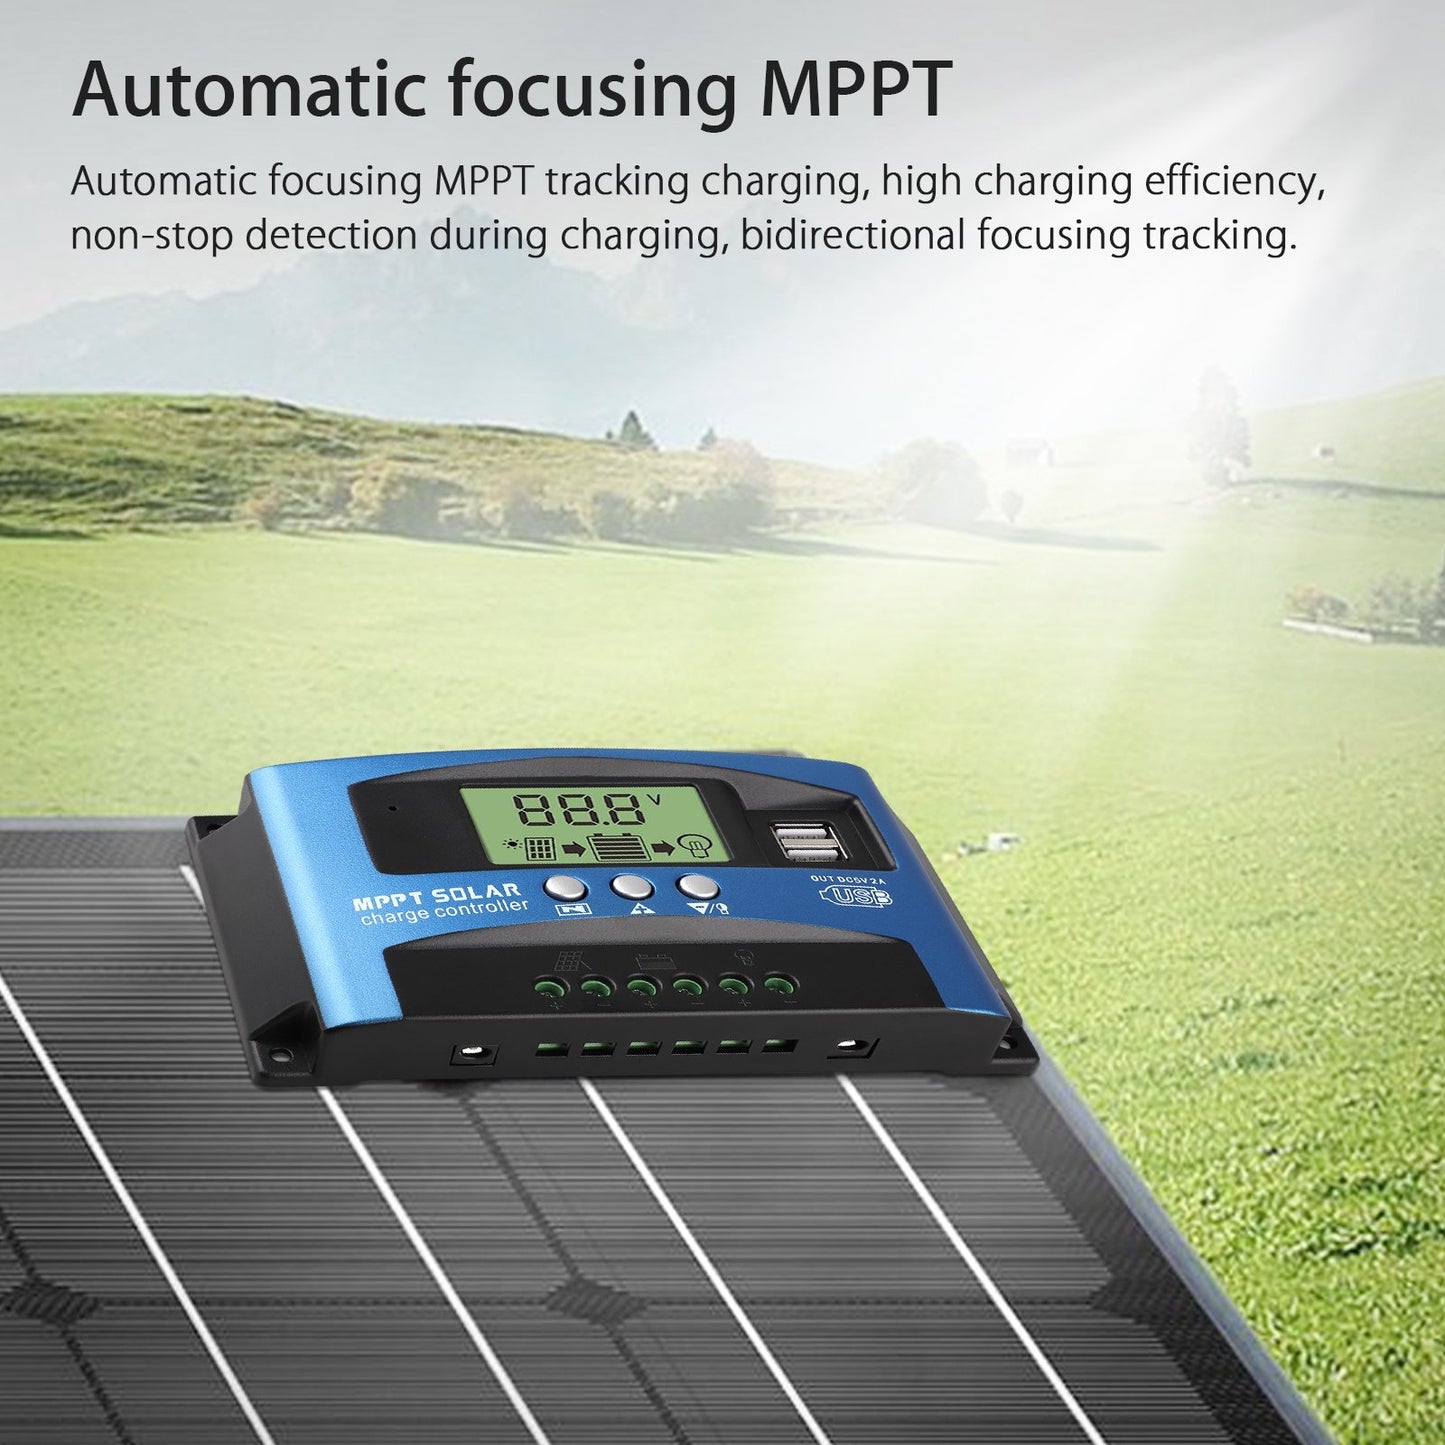 MPPT Solar Panel Regulator Charge Controller 100A